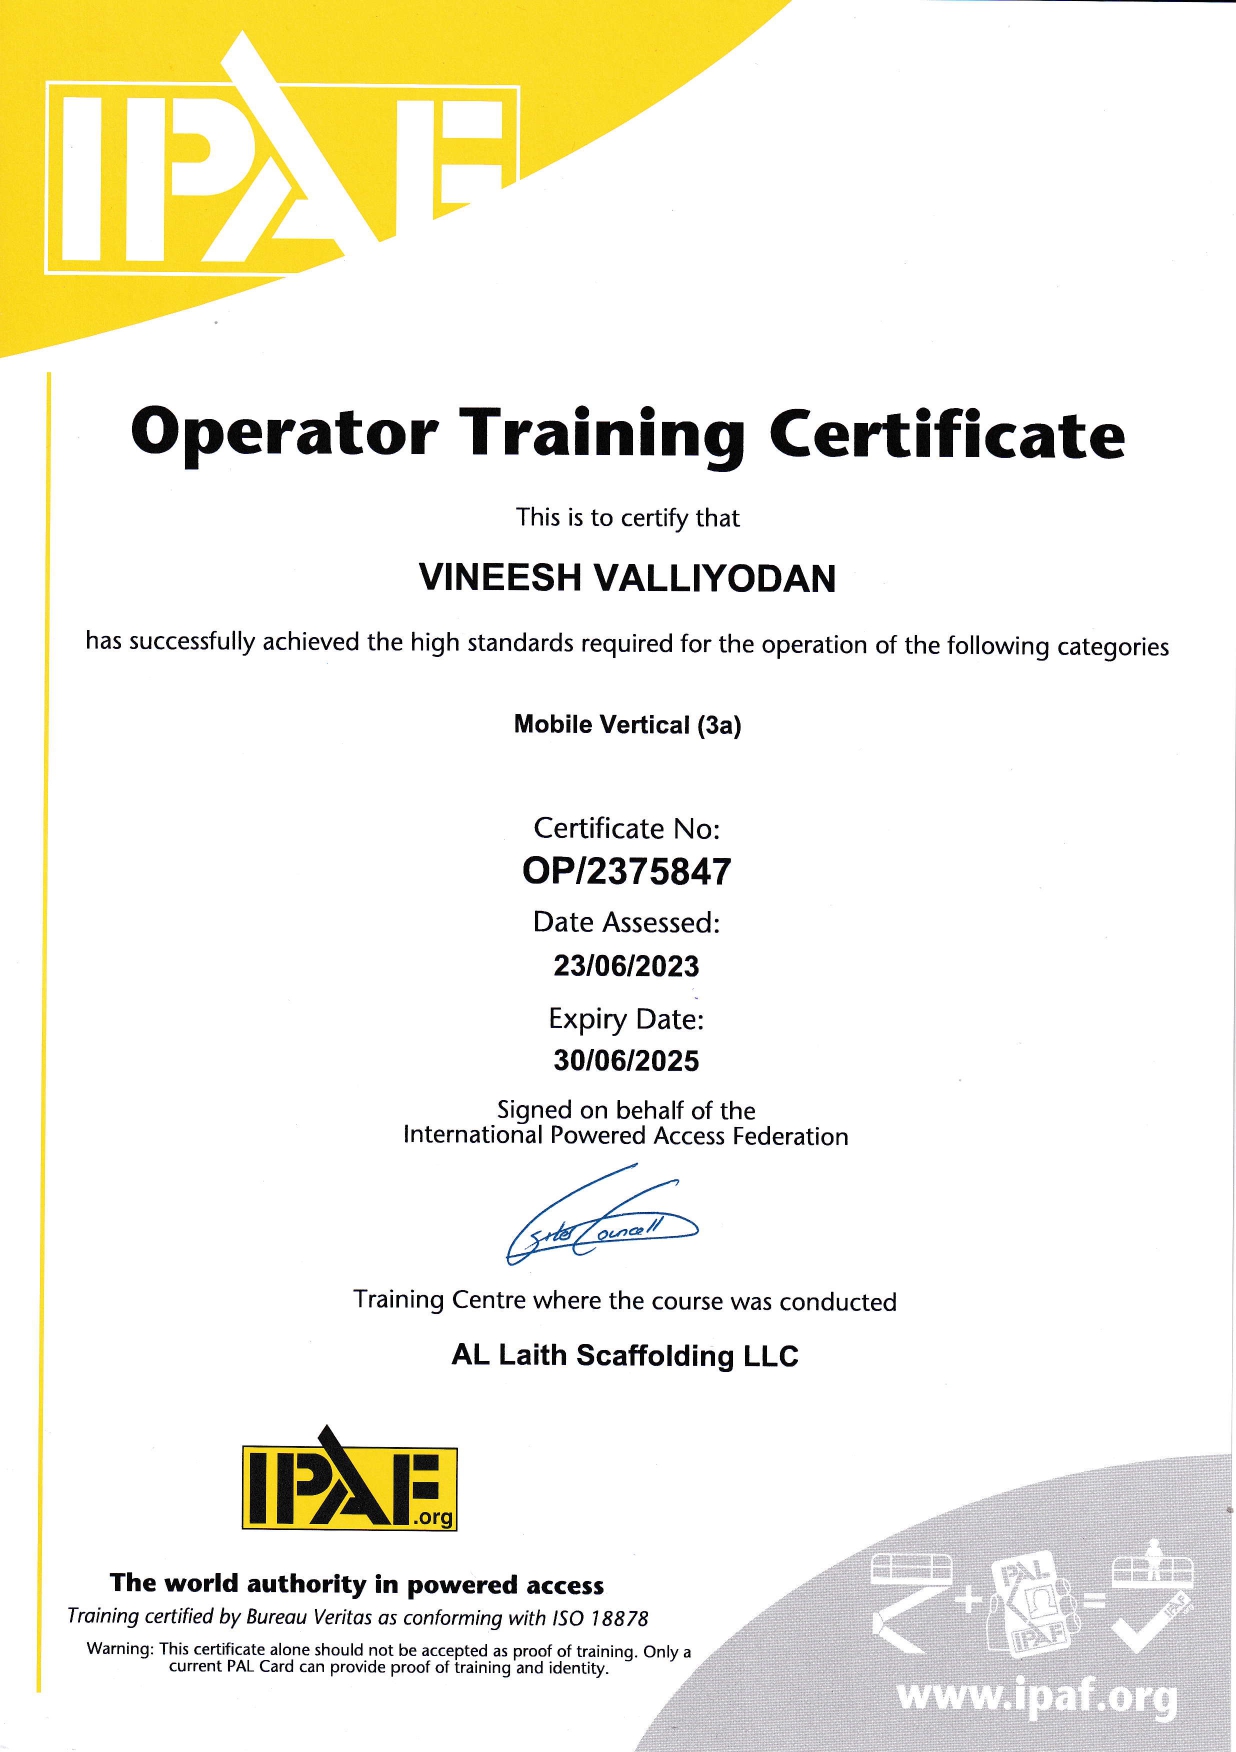 ipaf_training_certificate-1